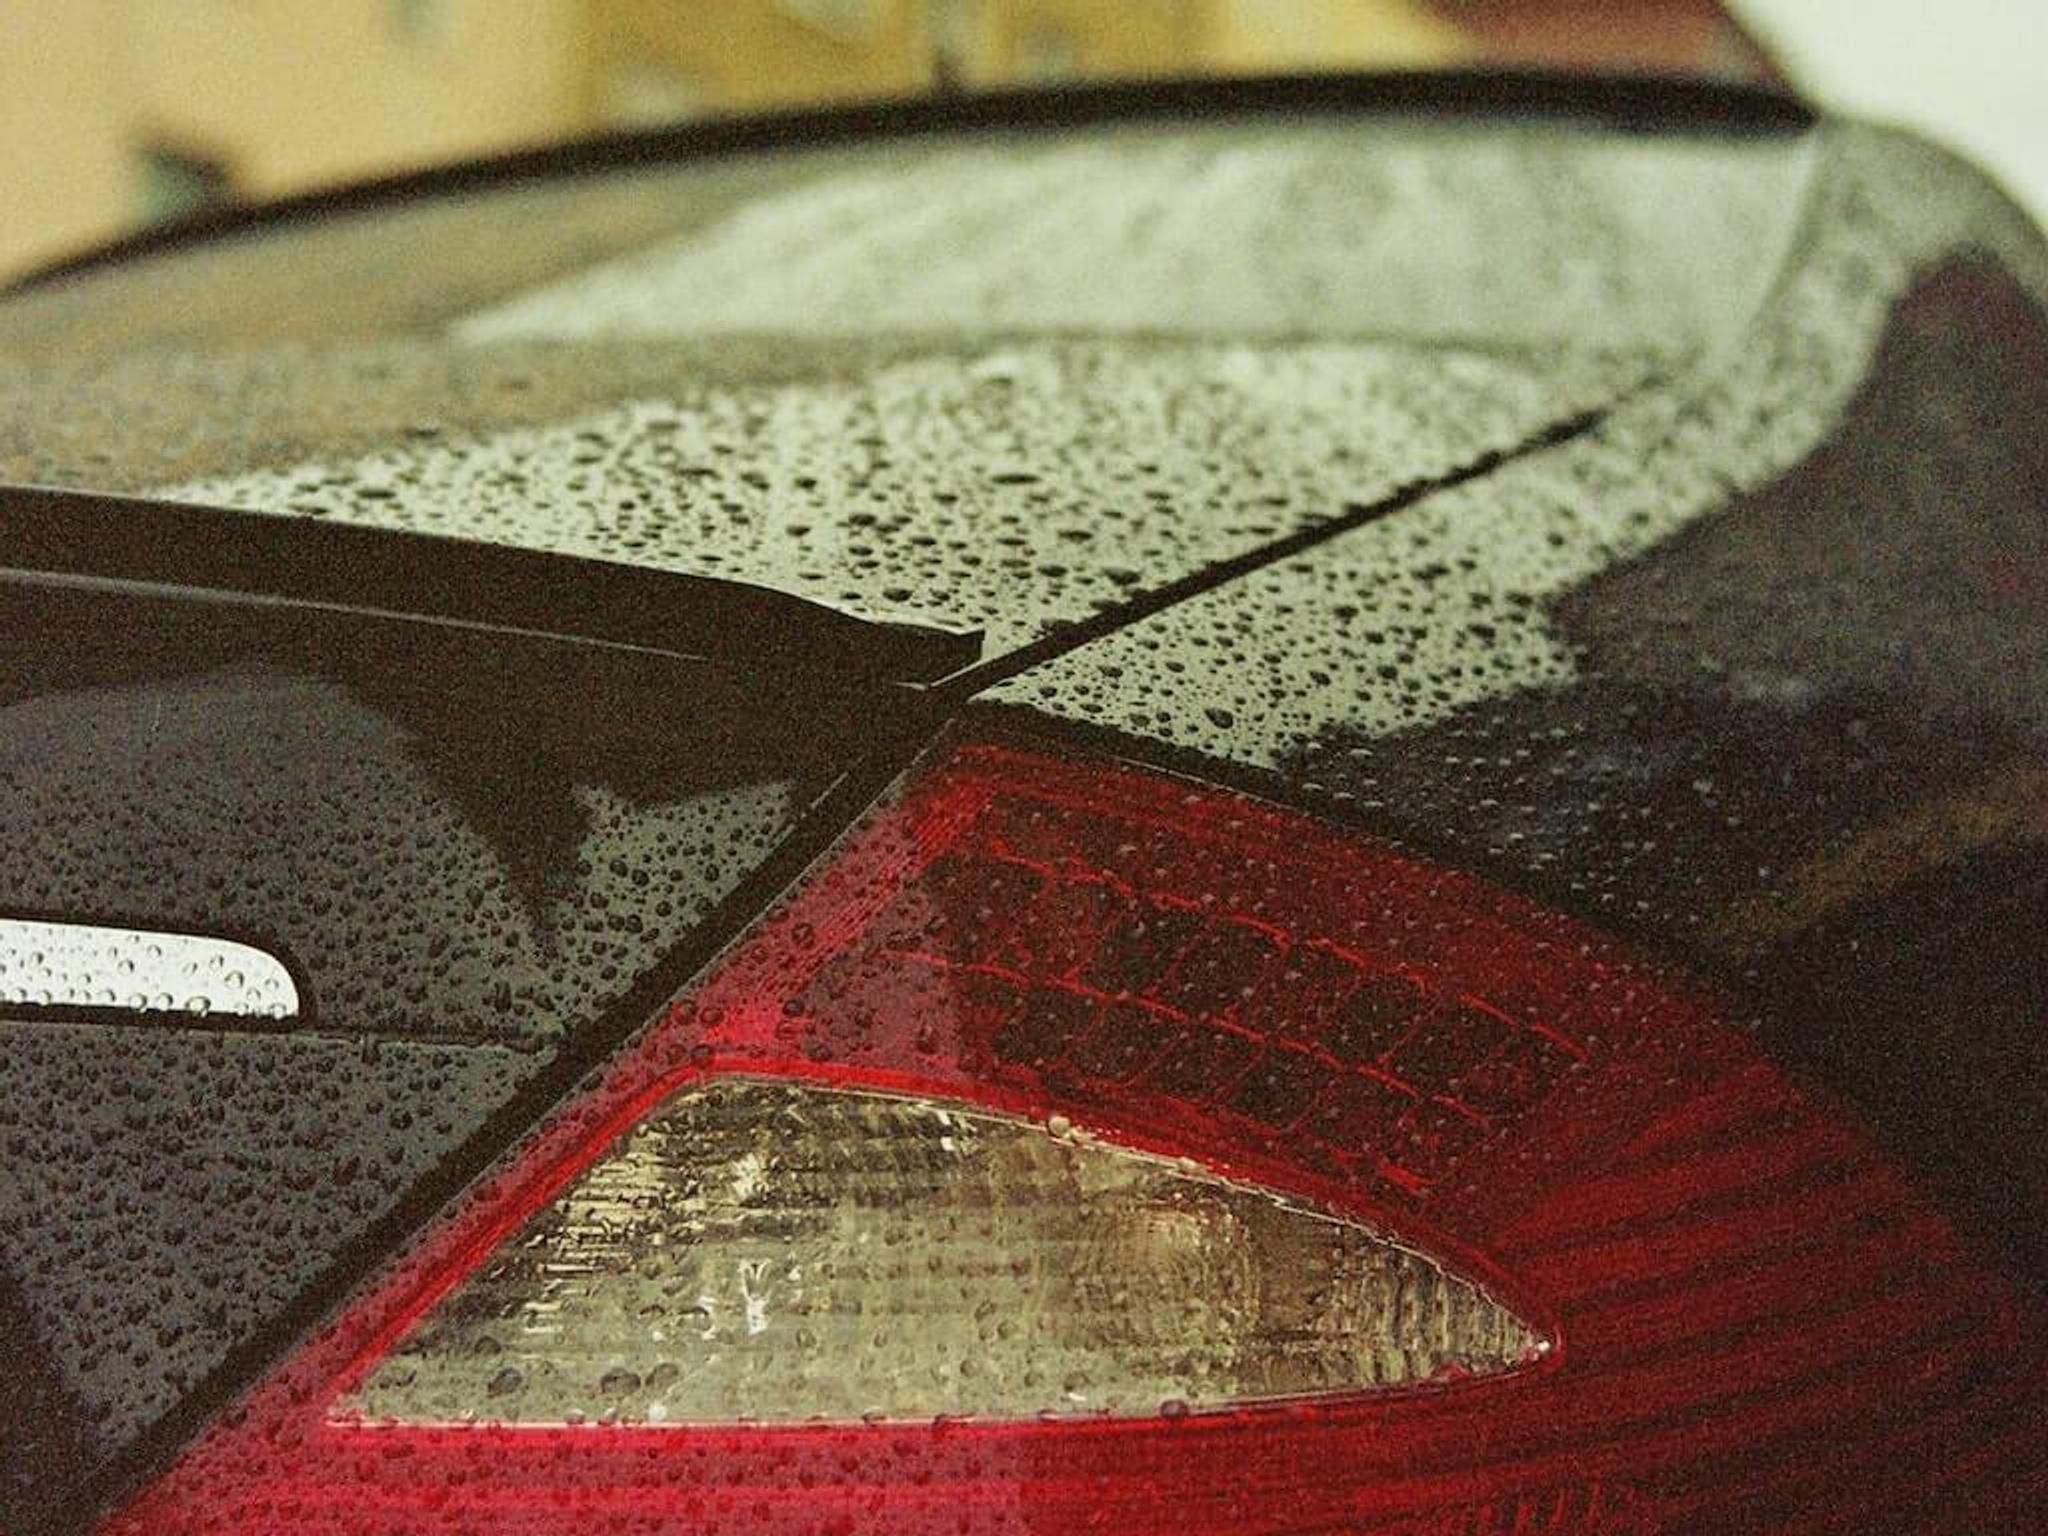 Hydrophobic car surface